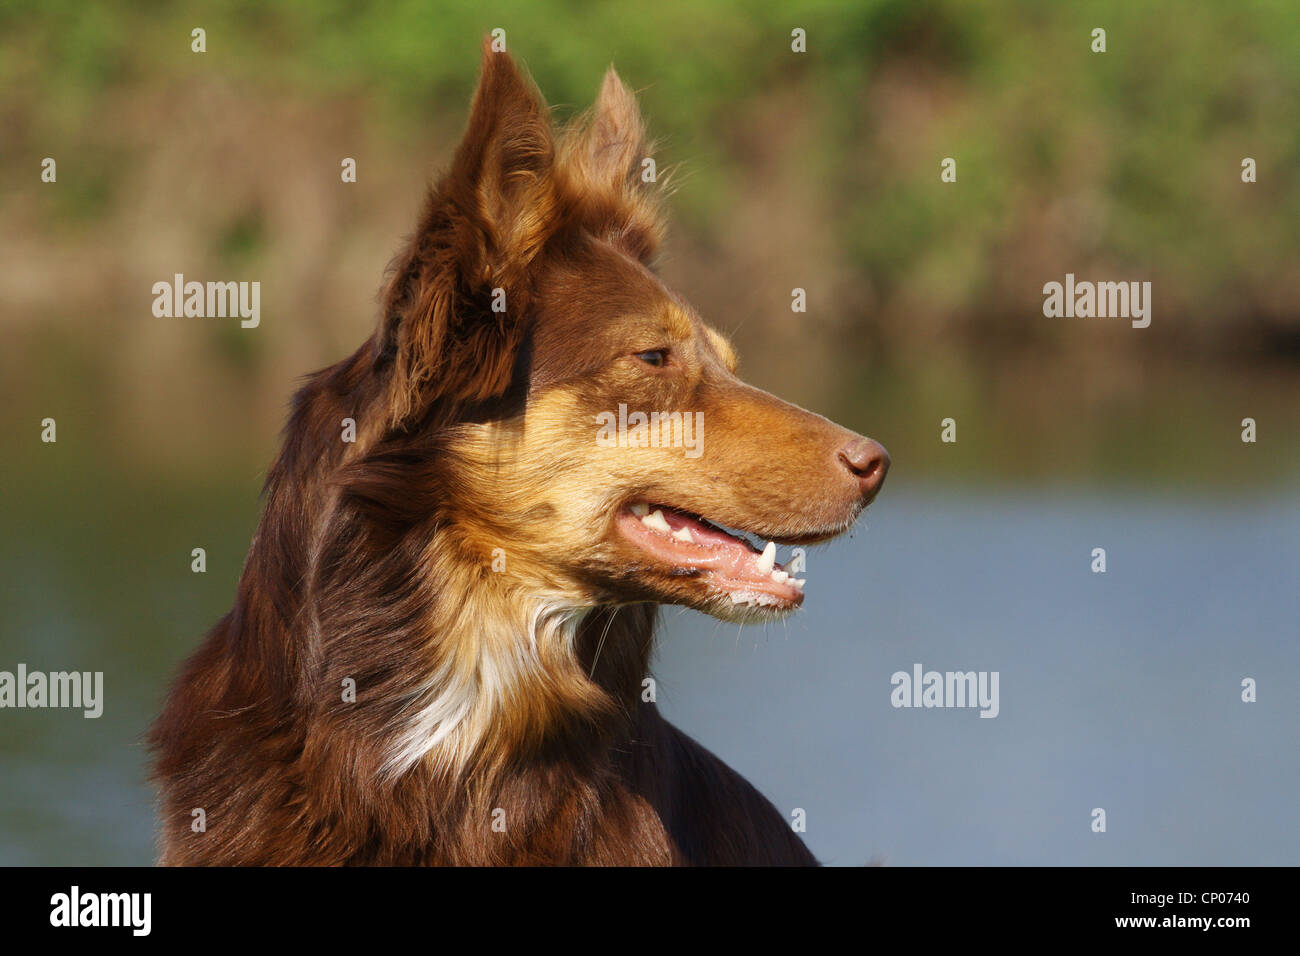 Australian Shepherd (Canis lupus f. familiaris), Australian Shepherd mixed breed dog, portrait Stock Photo